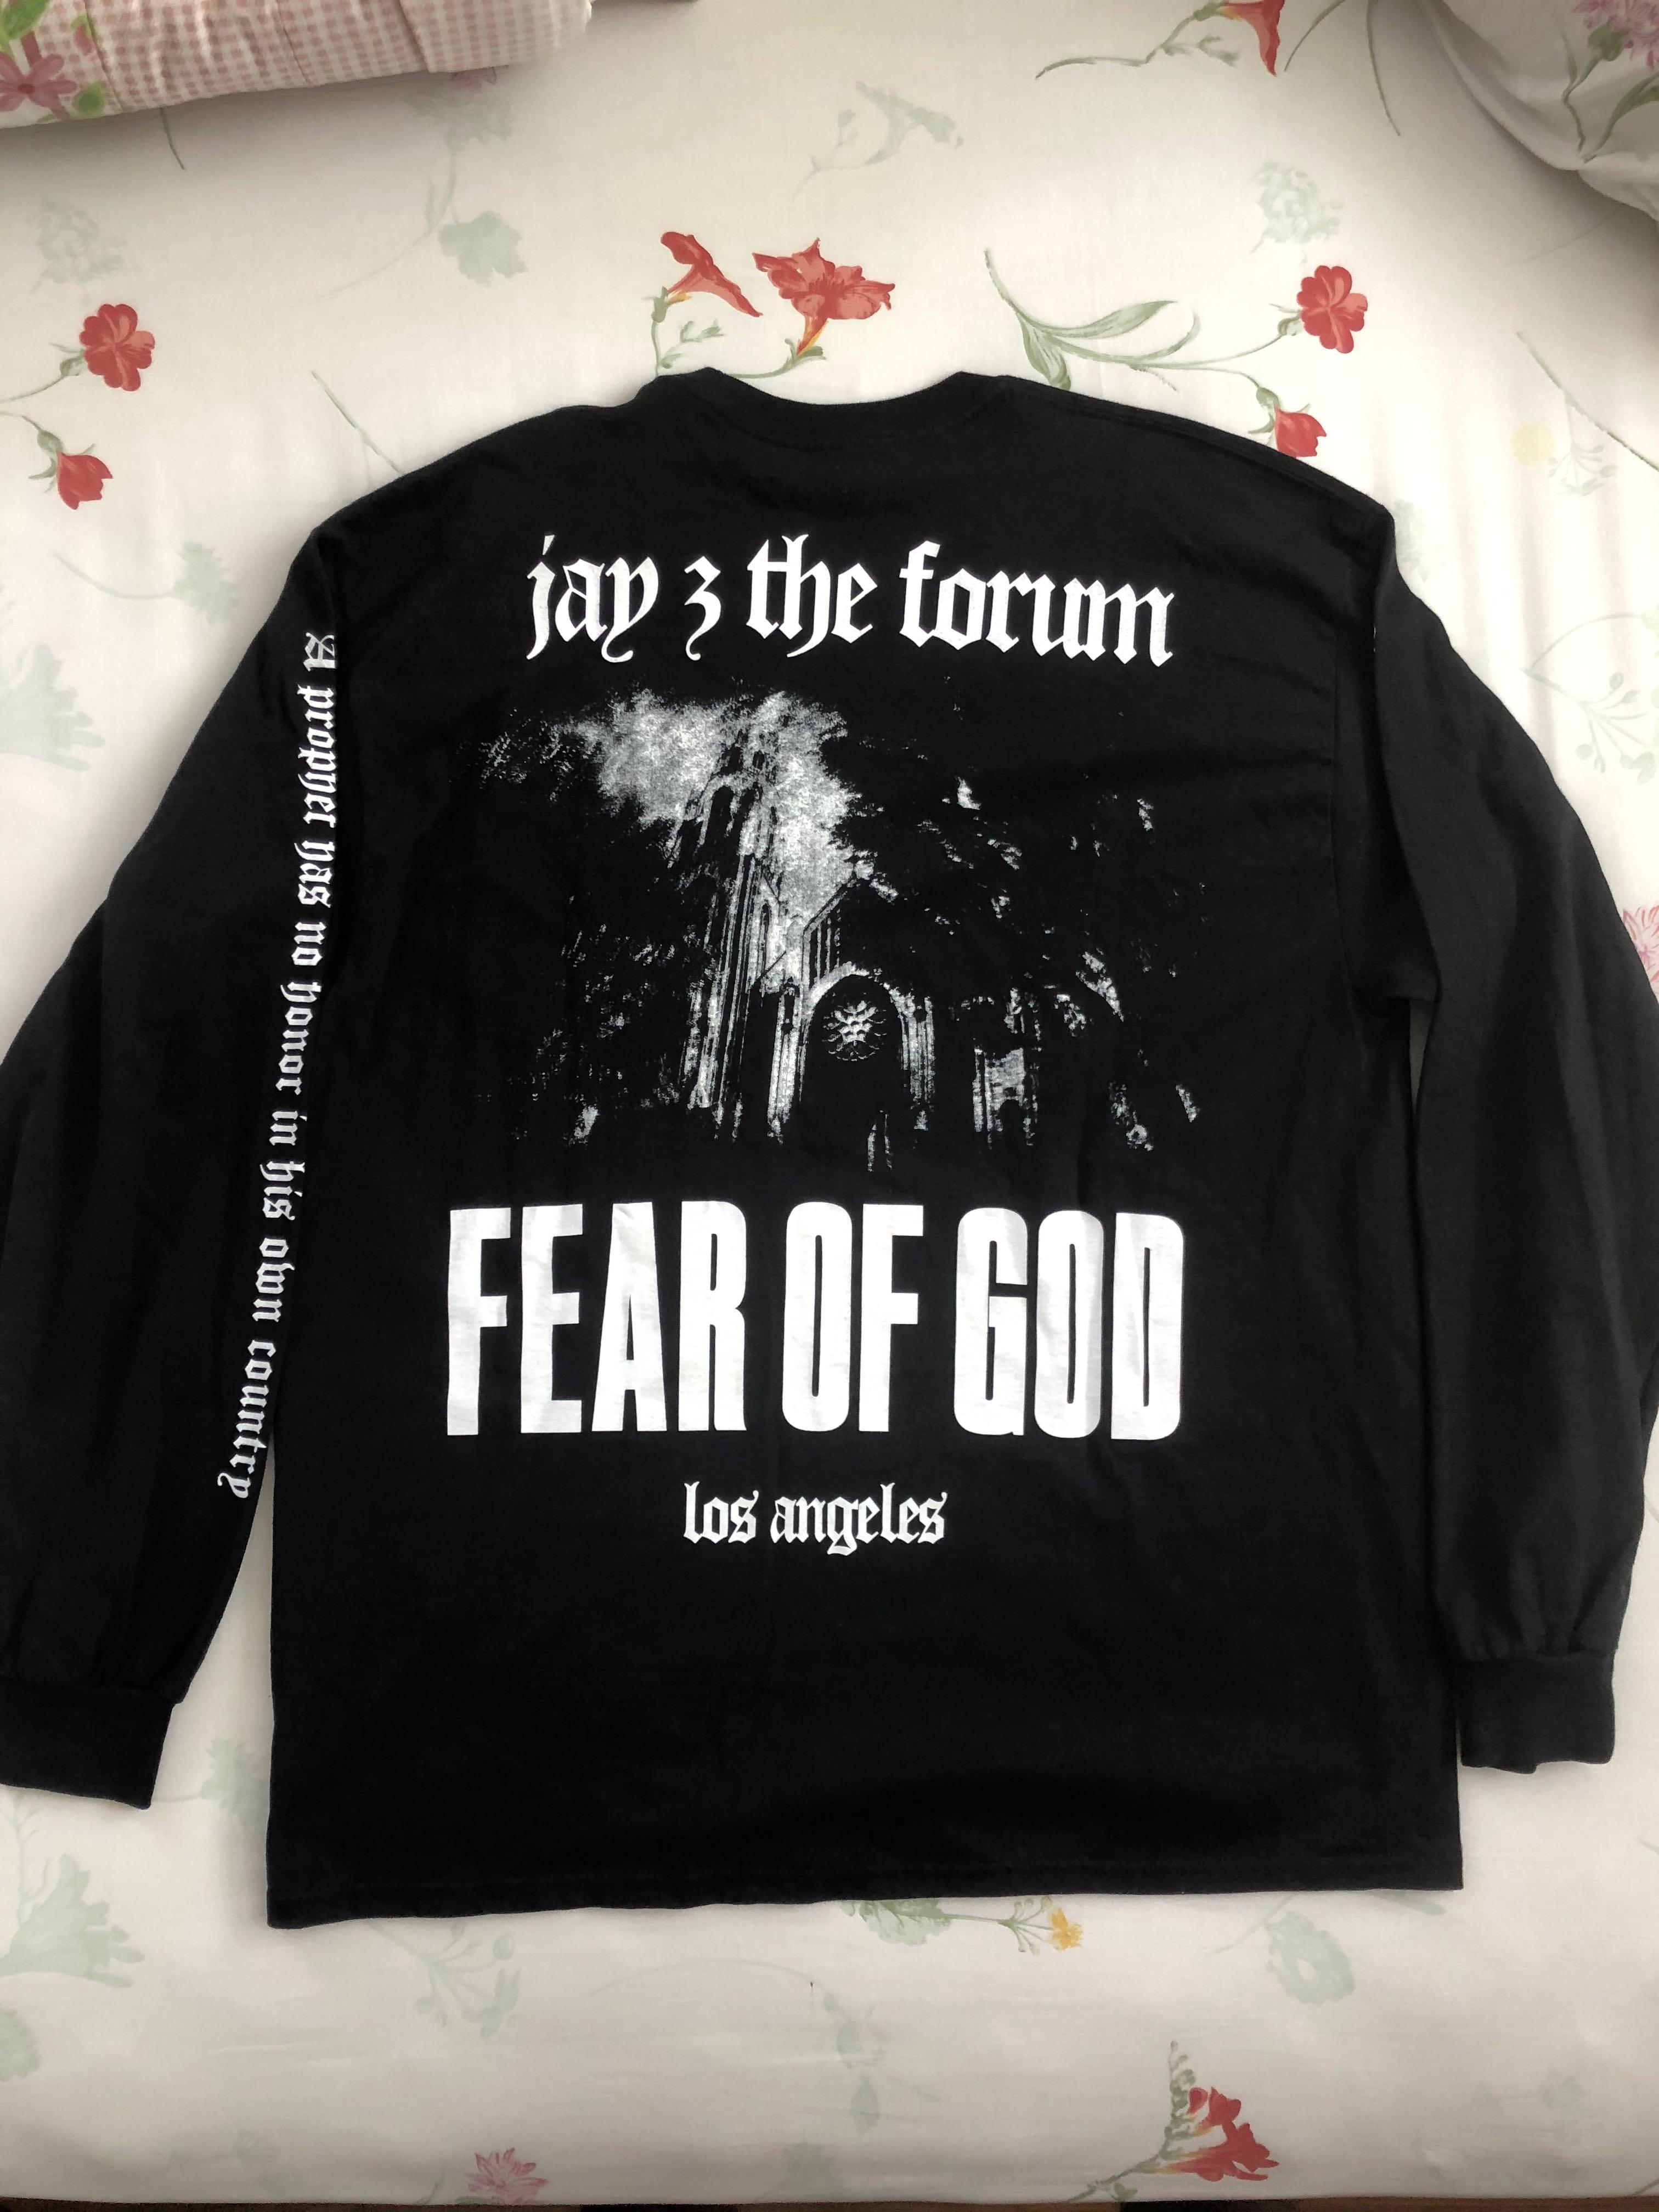 Fear of God x Jay Z 4:44 Tour Merch